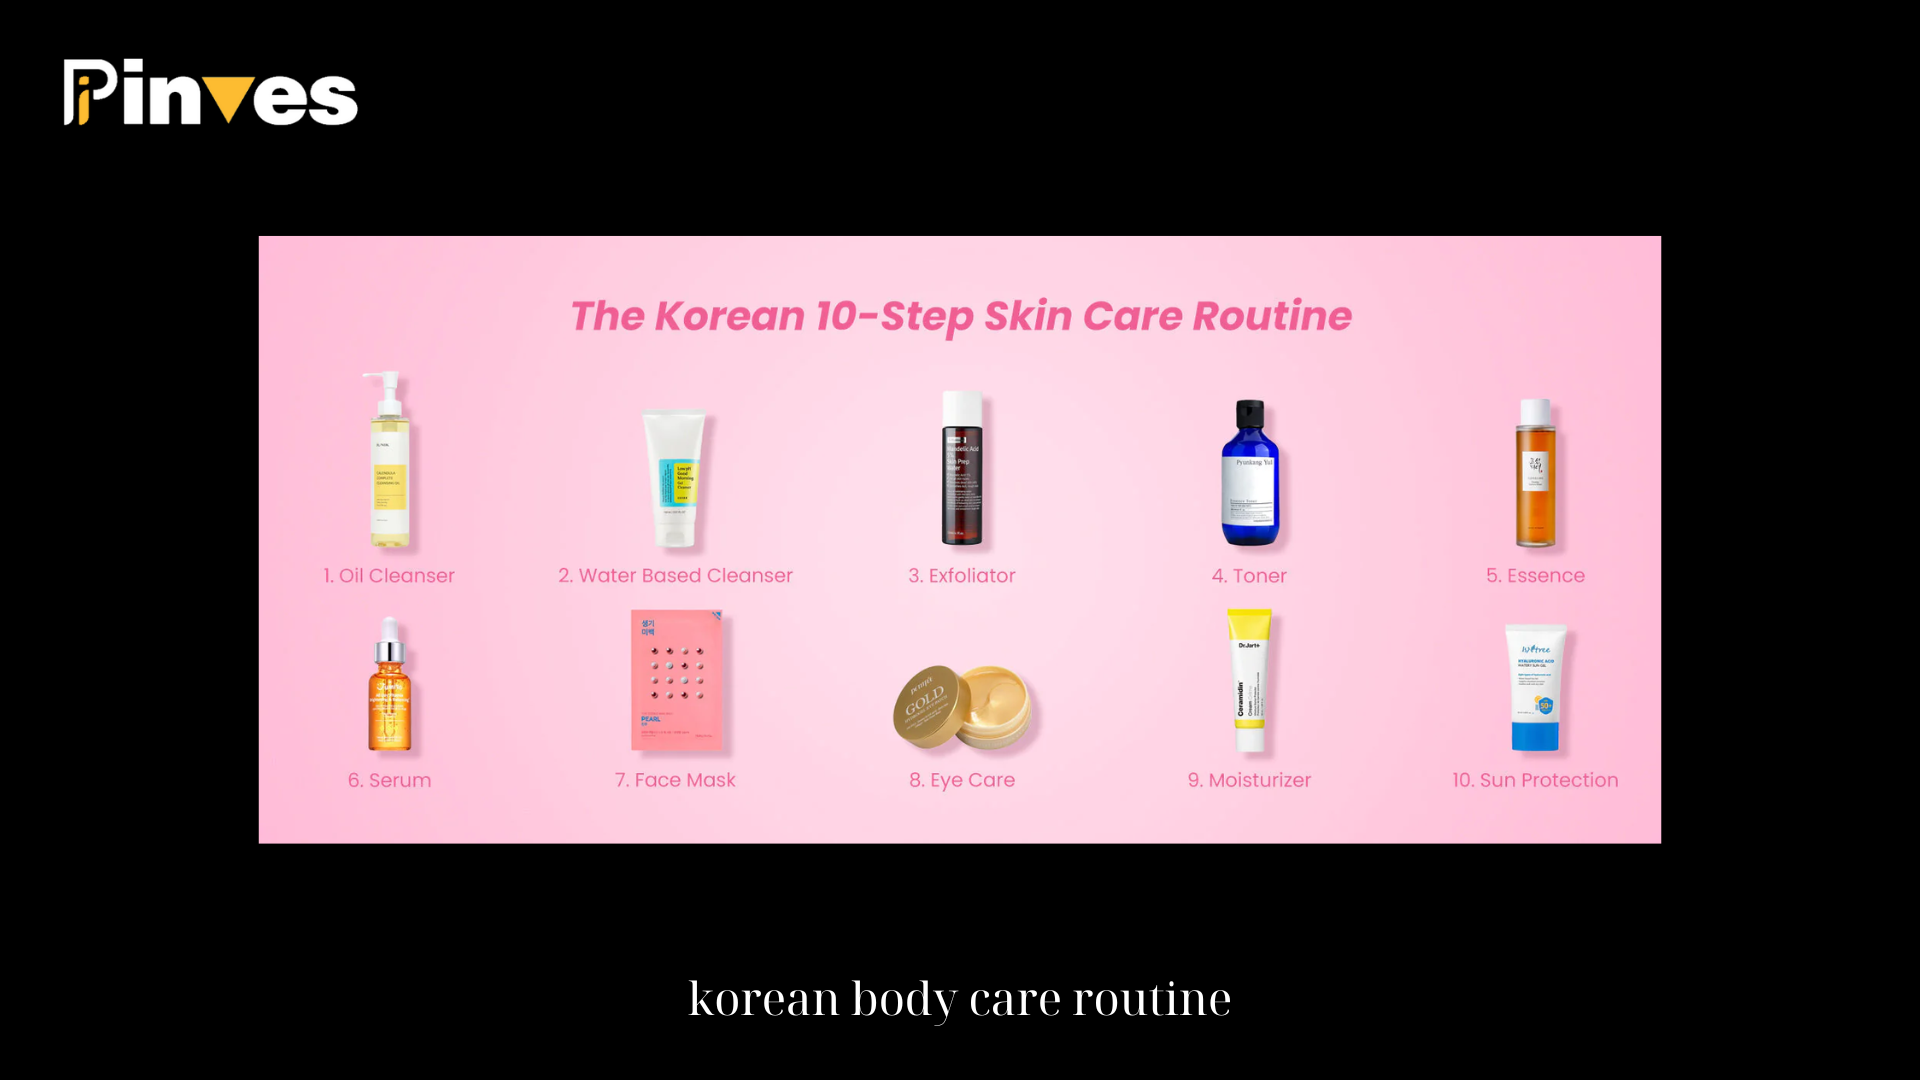 Korean body care routine